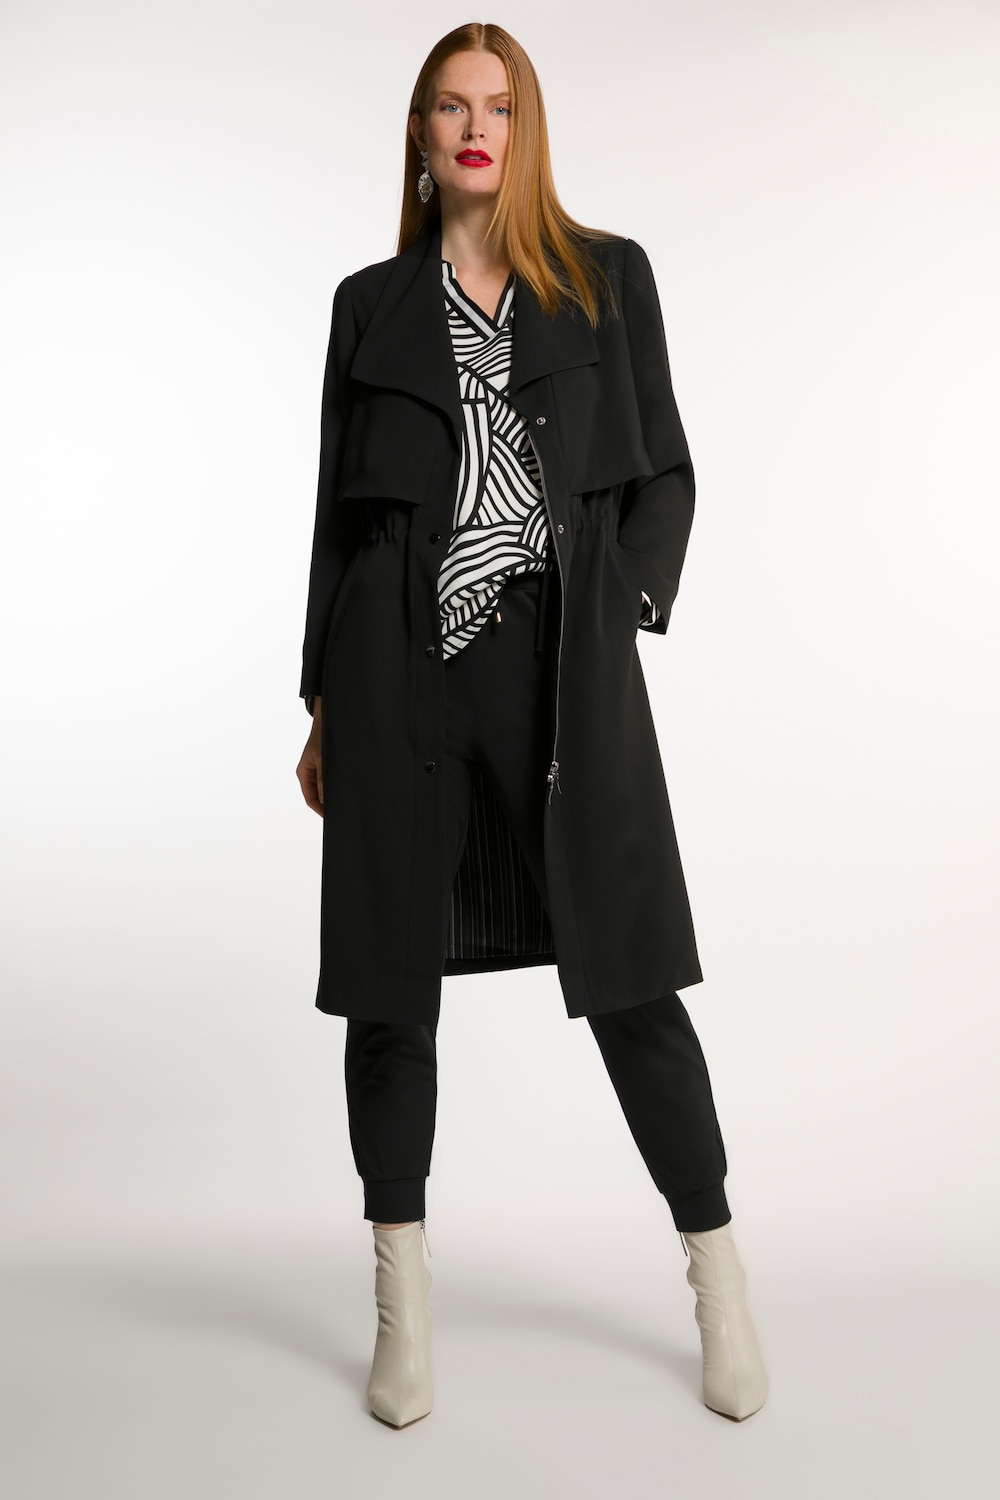 Plus Size Spade Collar Zip Front Lightweight Coat, Woman, black, size: 16/18, artificial silk/polyester, Ulla Popken